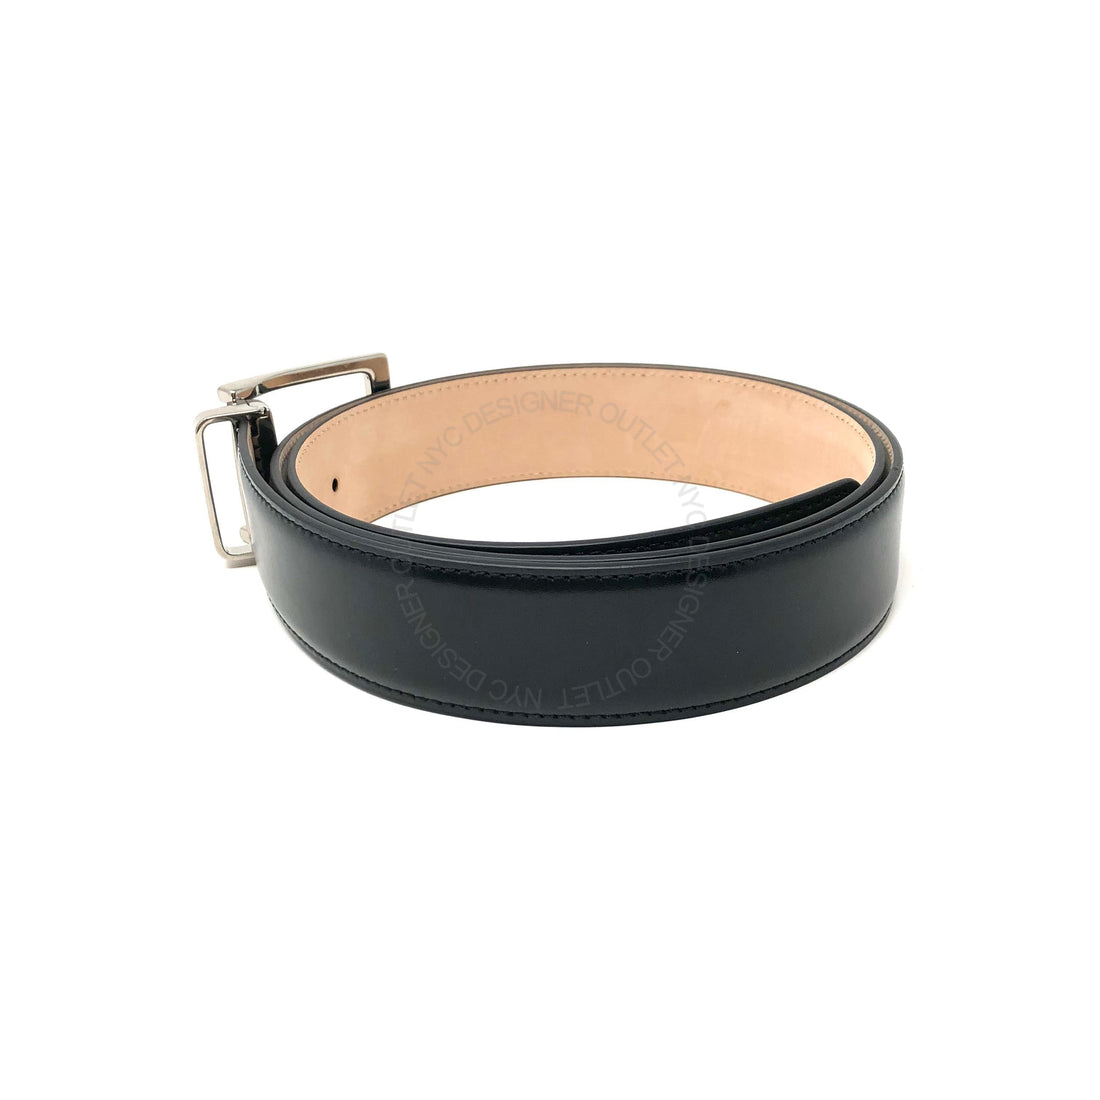 Men's Tod's adjustable belt